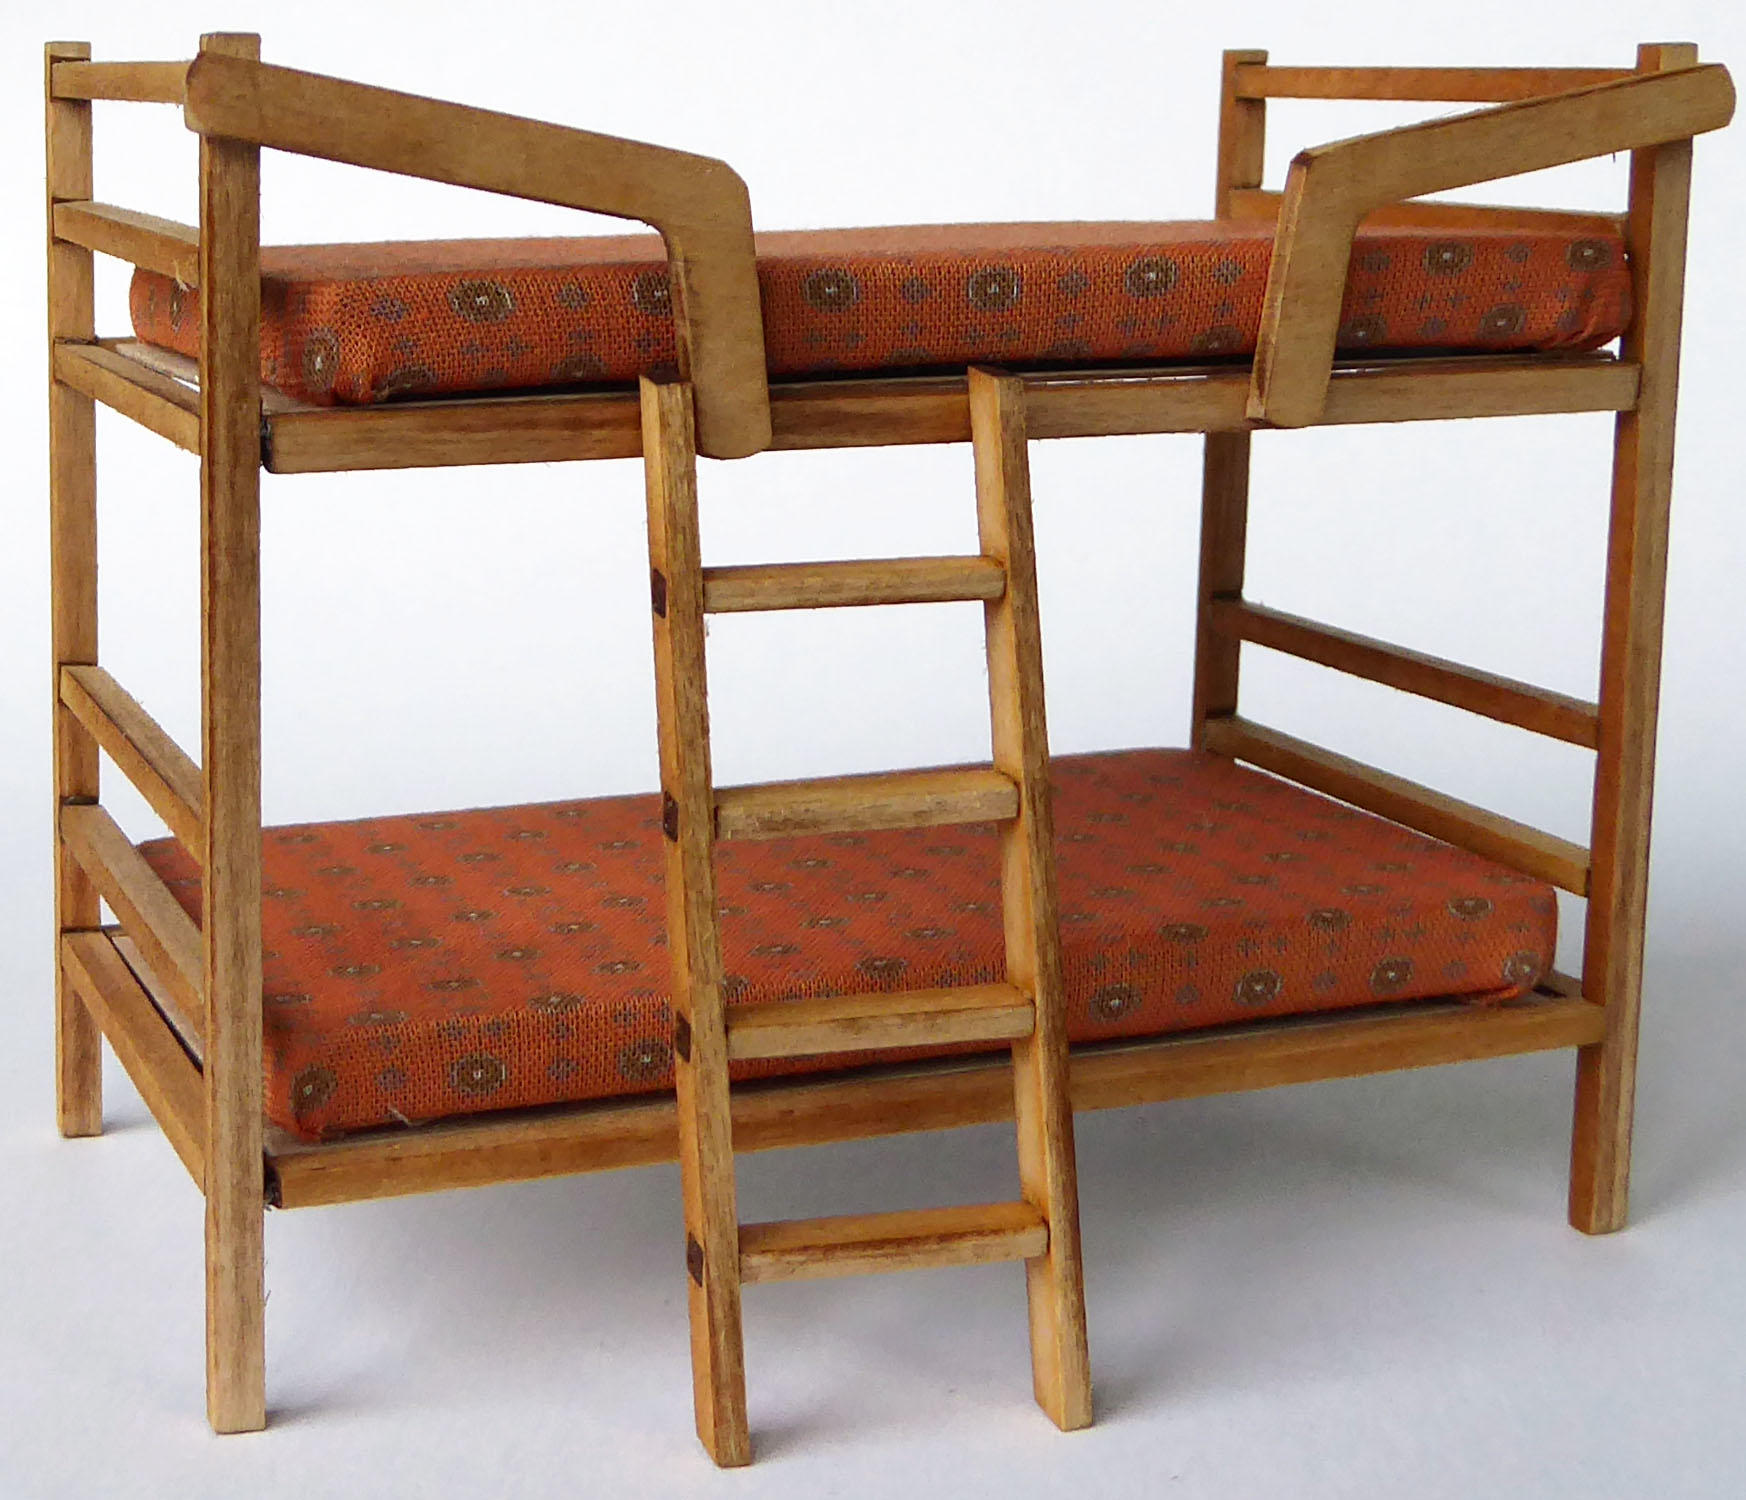 Vintage Bunk Beds For Laptrinhx, Vintage Looking Bunk Beds